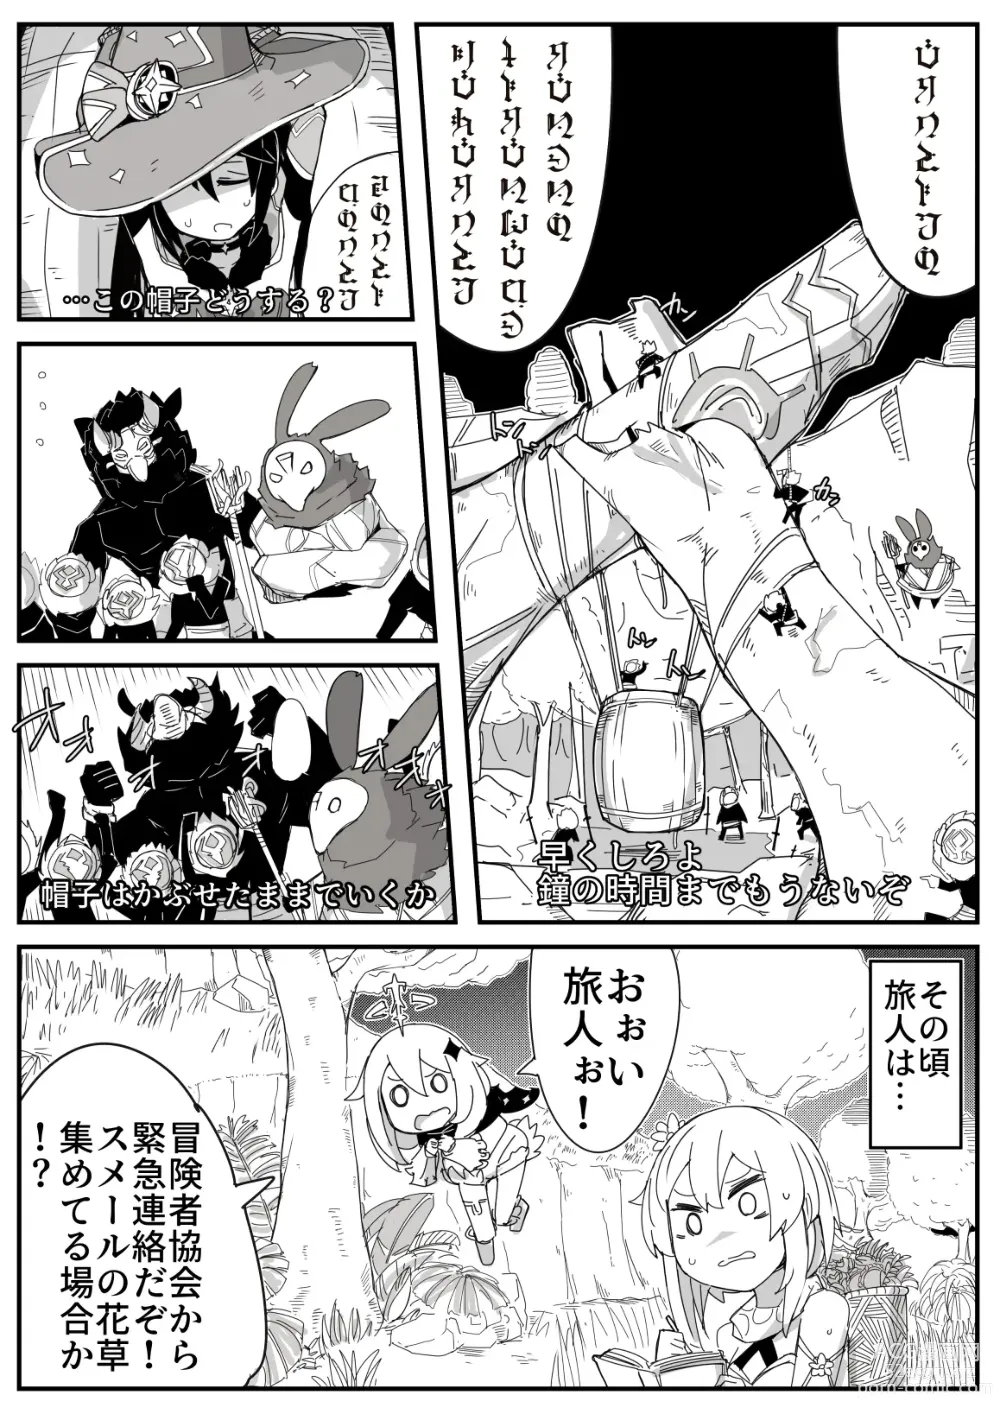 Page 10 of doujinshi Ryona no Kane 2022